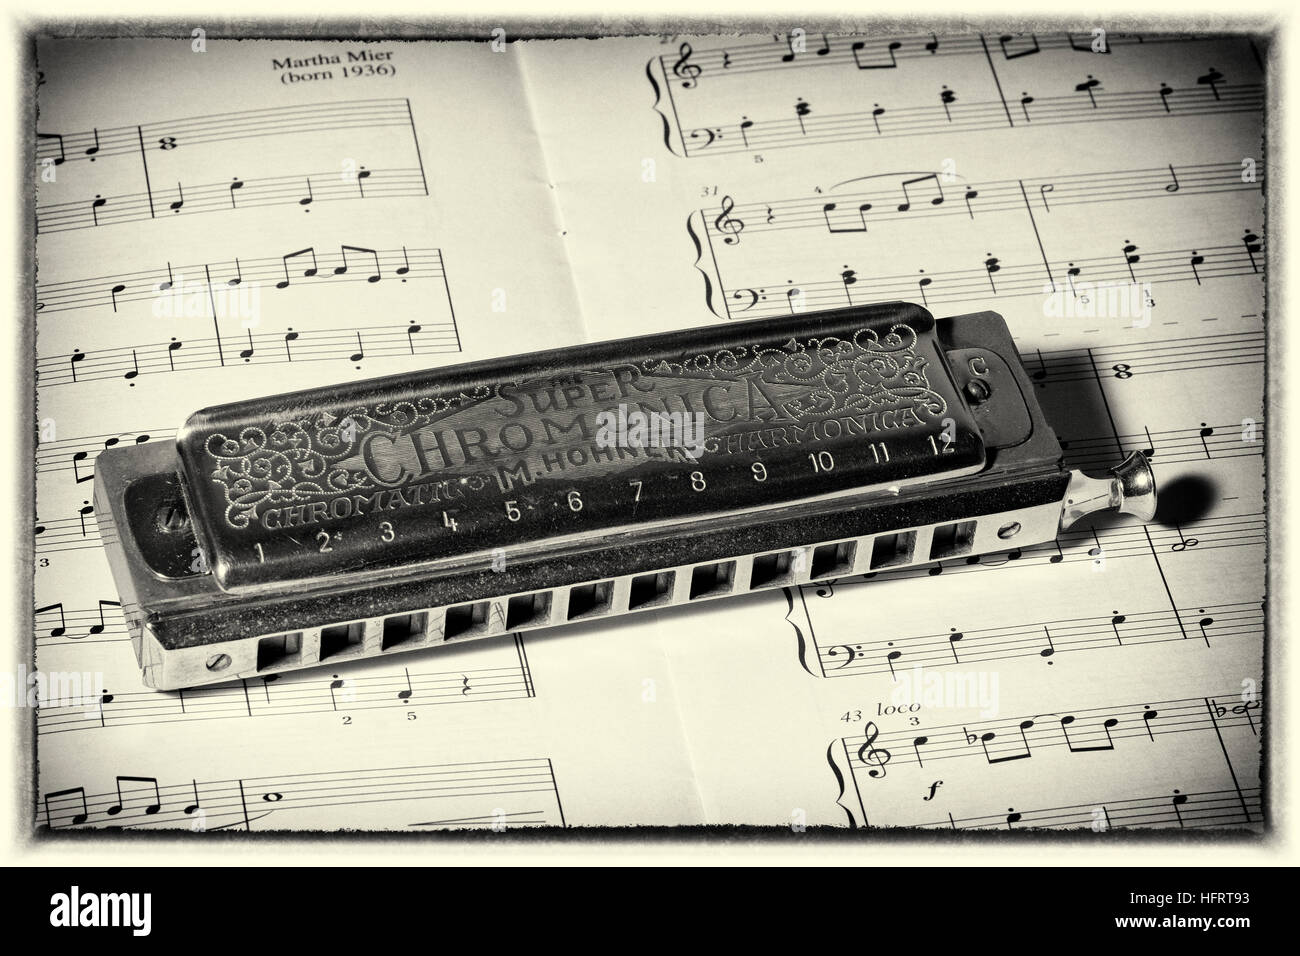 Two Harmonicas on Sheet Music Stock Photo - Image of shiny, harp